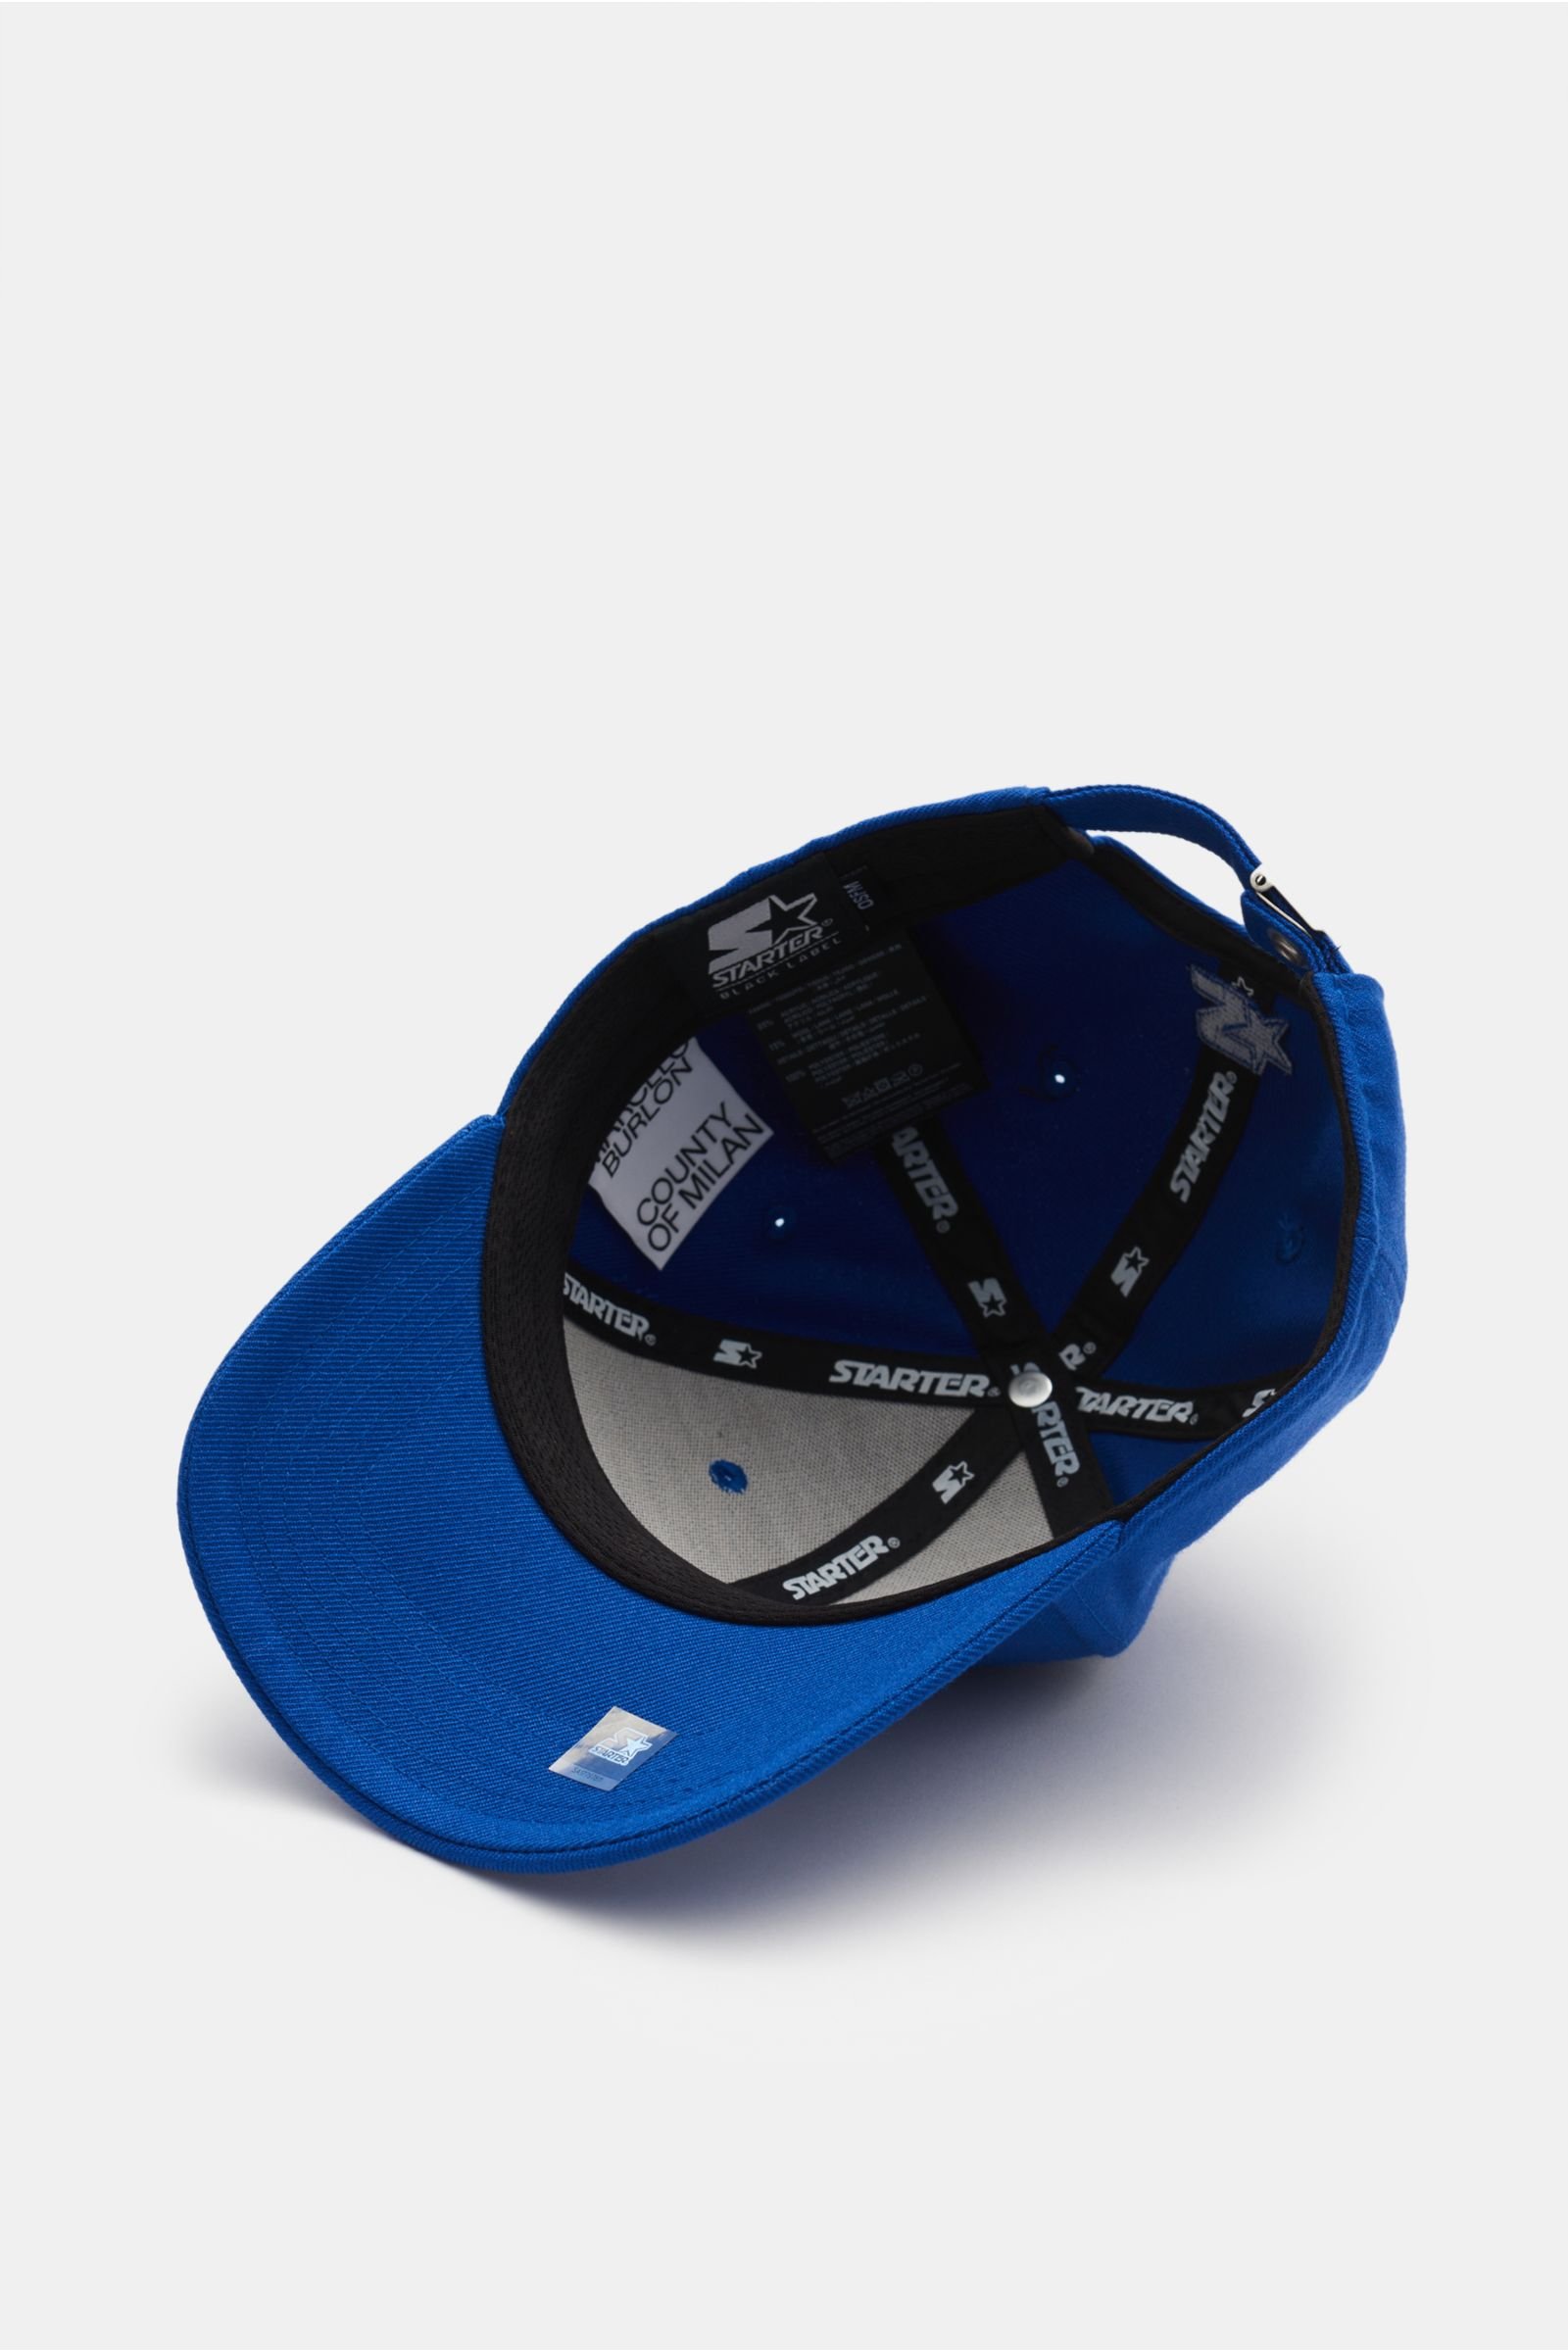 MARCELO BURLON baseball cap 'Cross' blue | BRAUN Hamburg